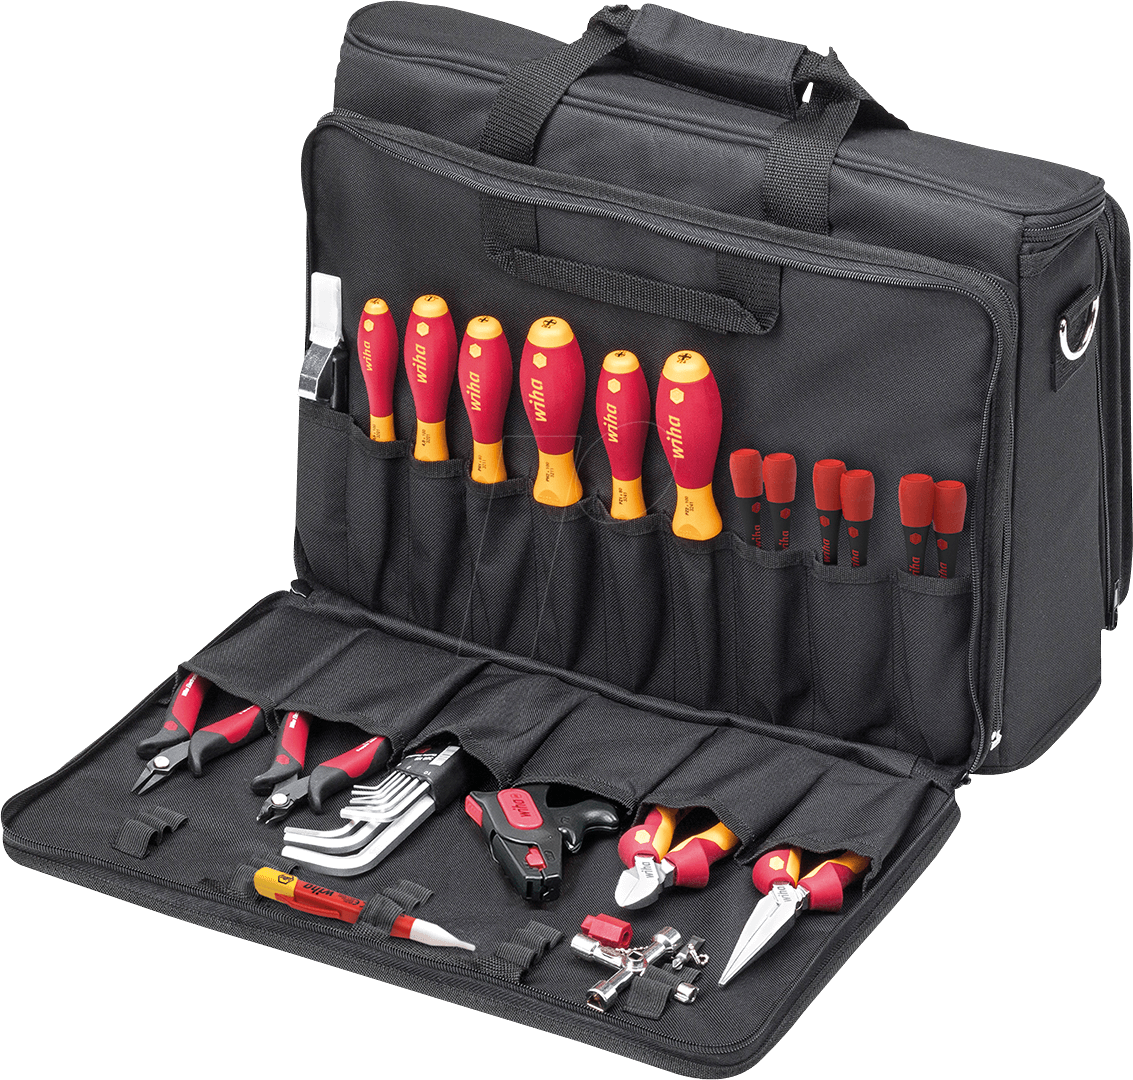 LOKASS Technician Tool Bag : Amazon.de: DIY & Tools